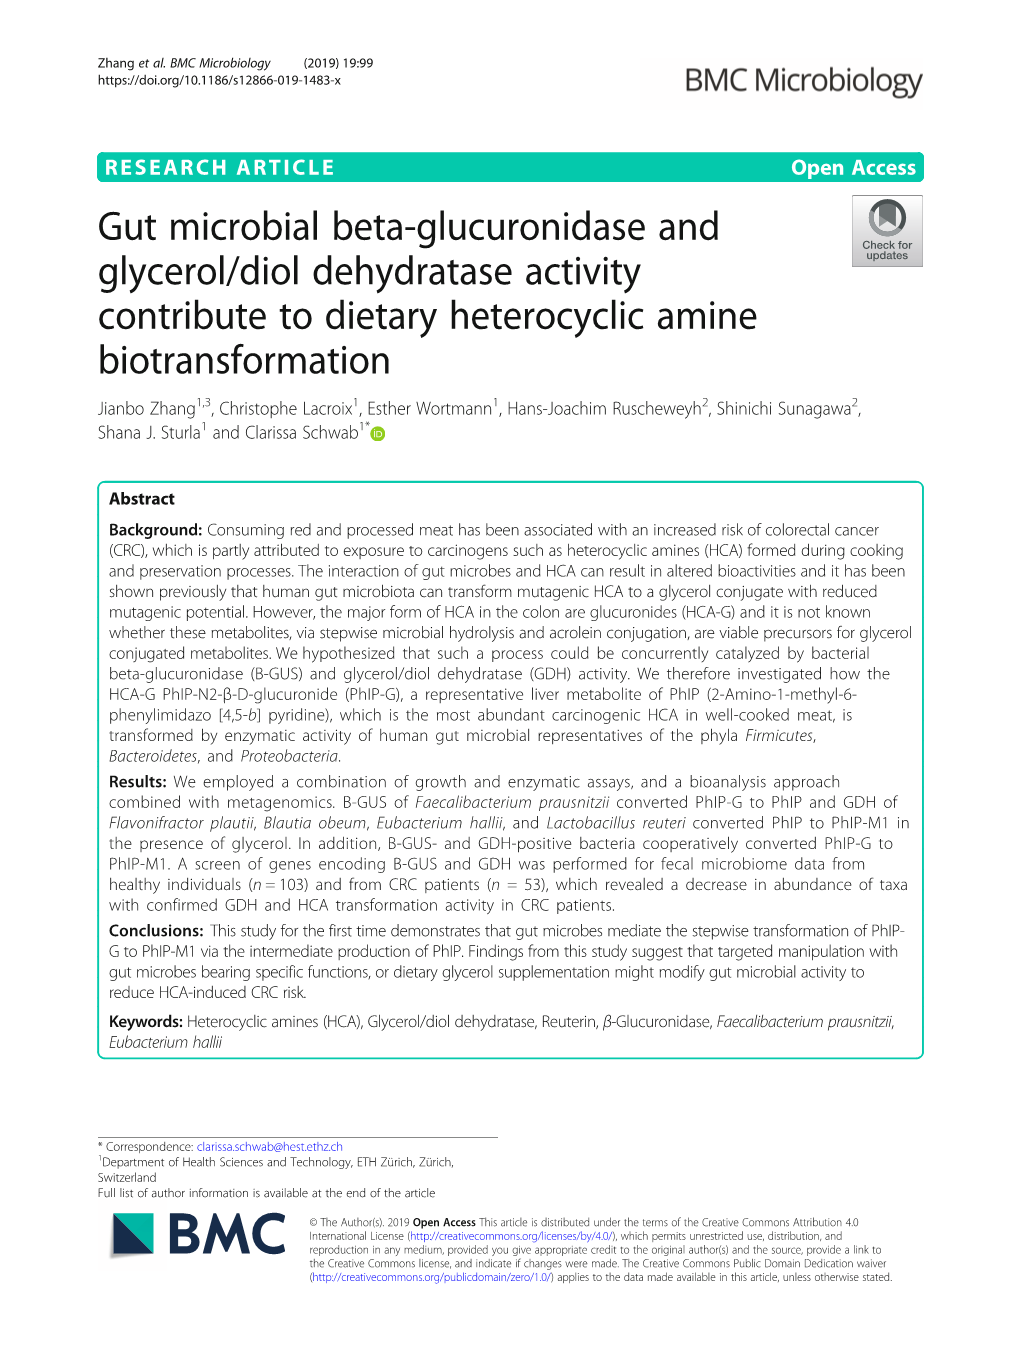 Gut Microbial Beta-Glucuronidase and Glycerol/Diol Dehydratase Activity